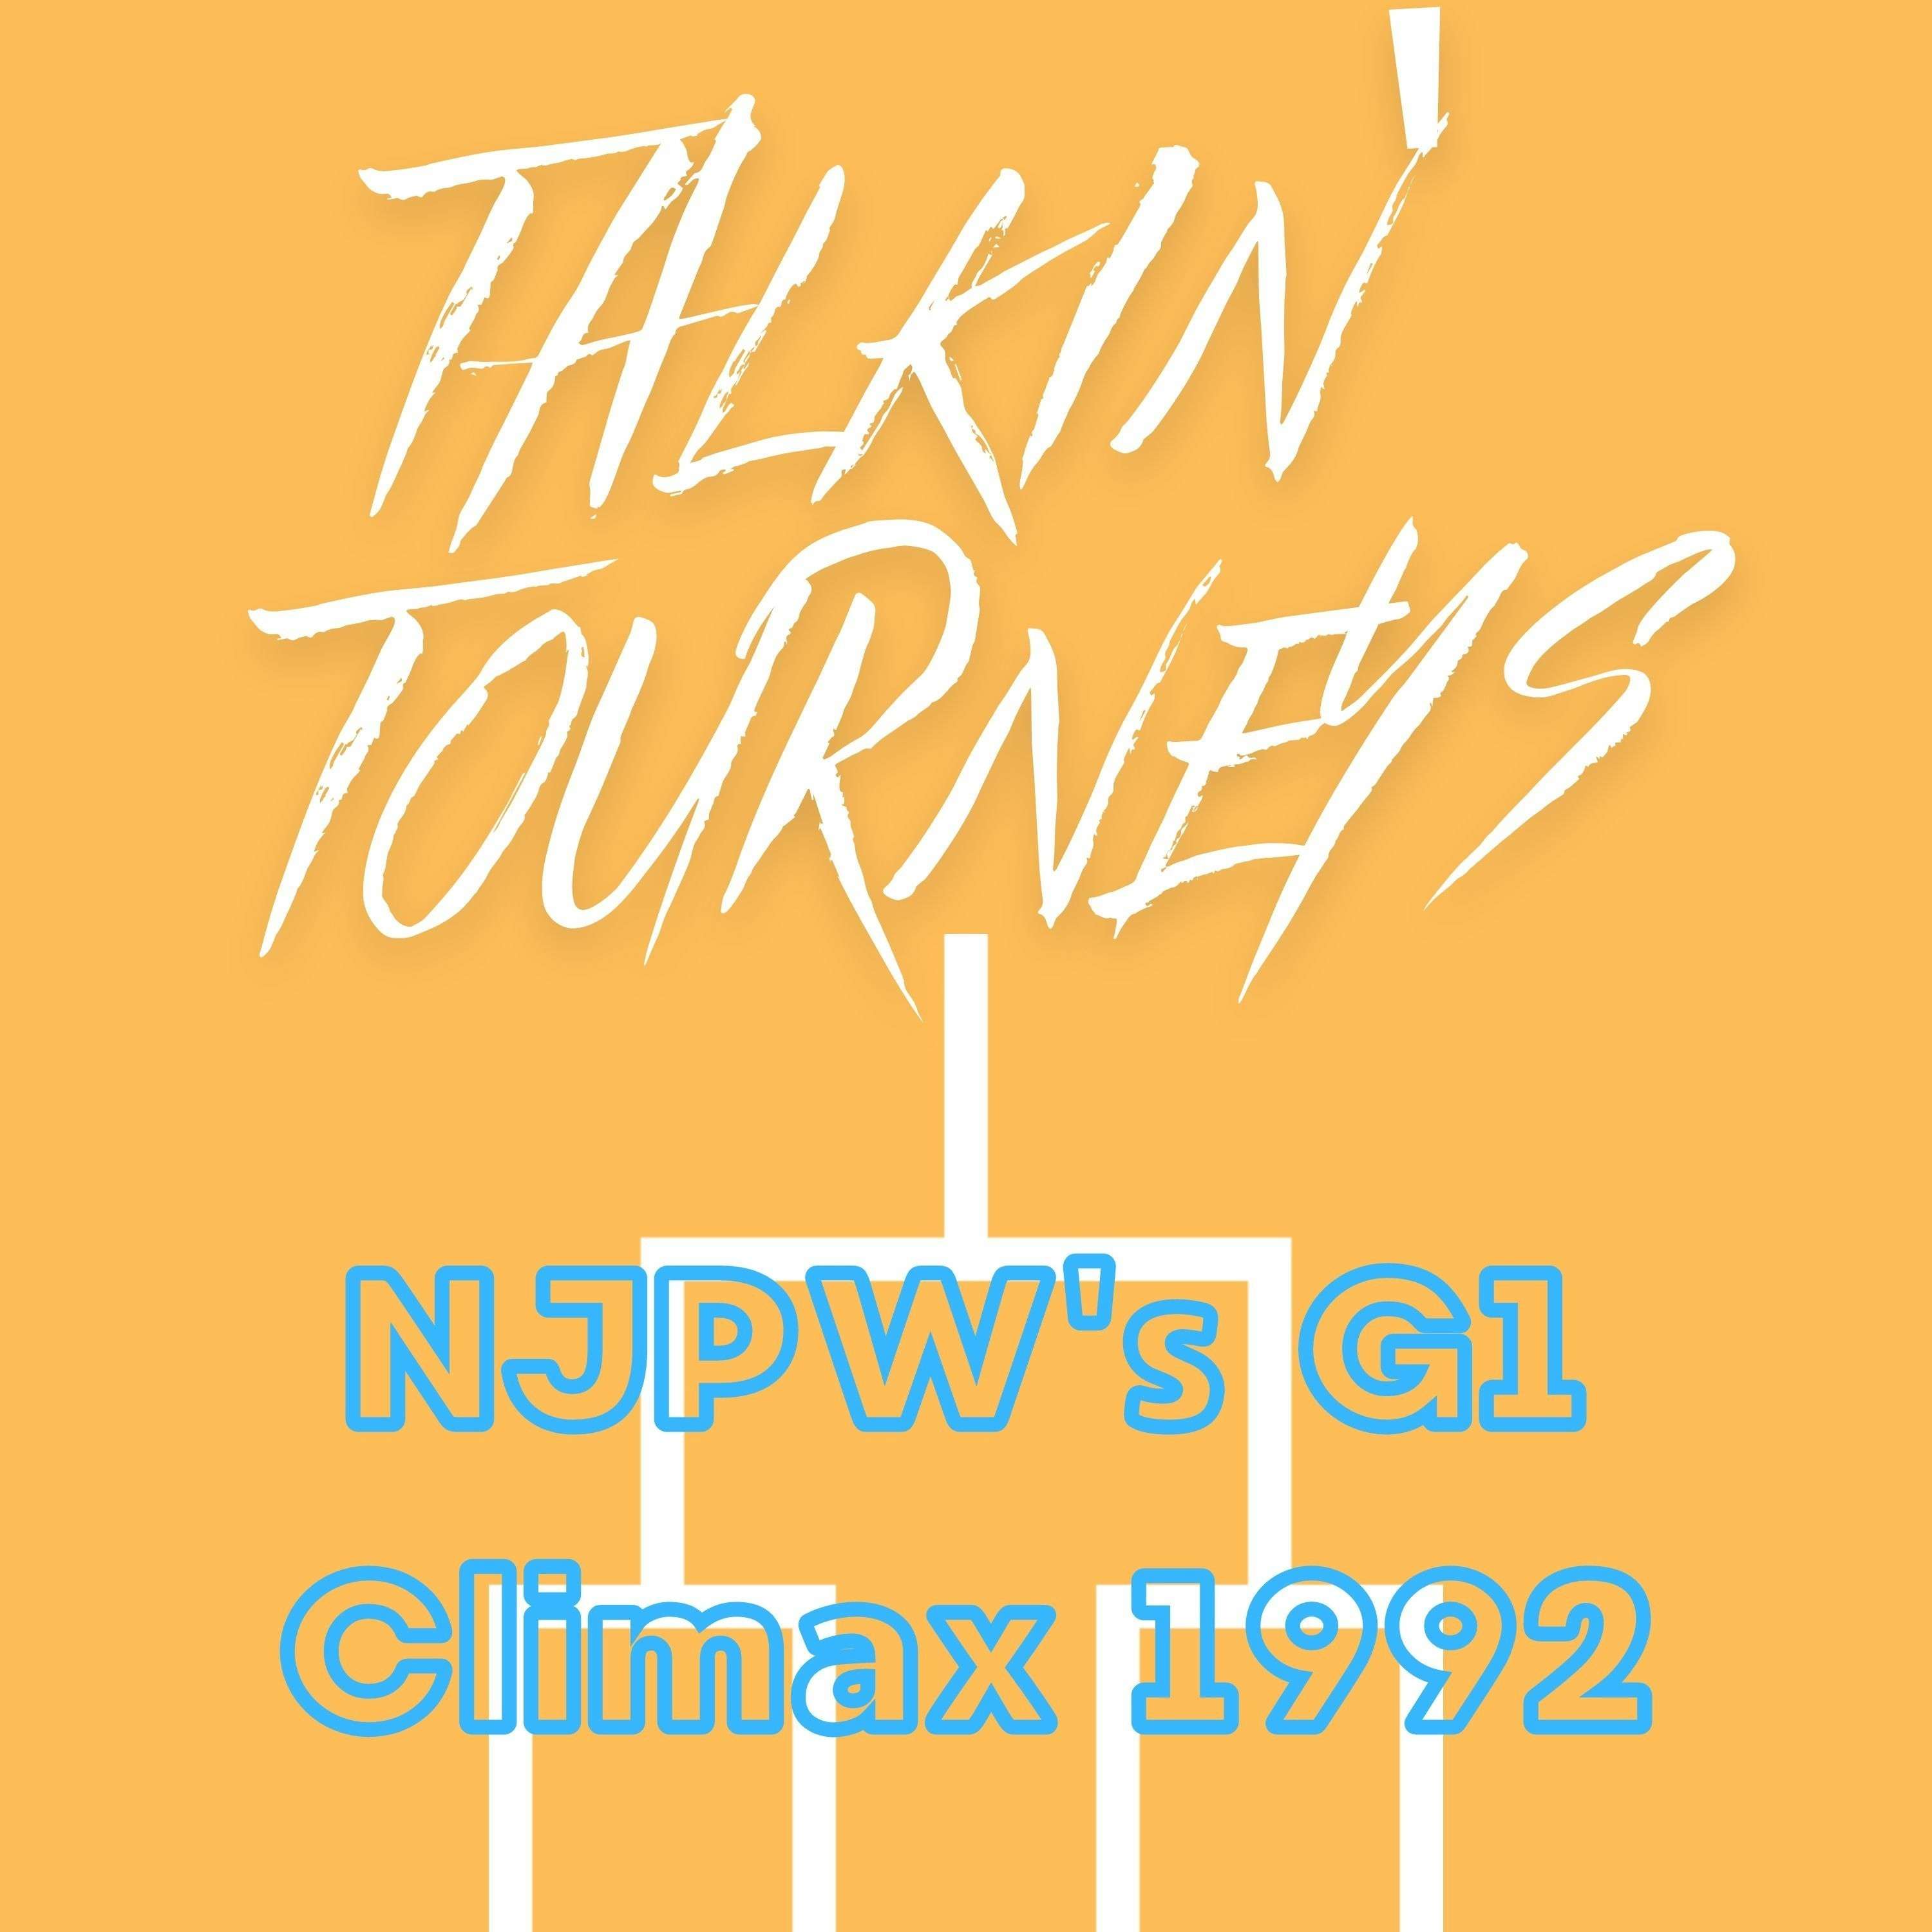 Talking Tourneys #14: NJPW's G1 Climax 1992